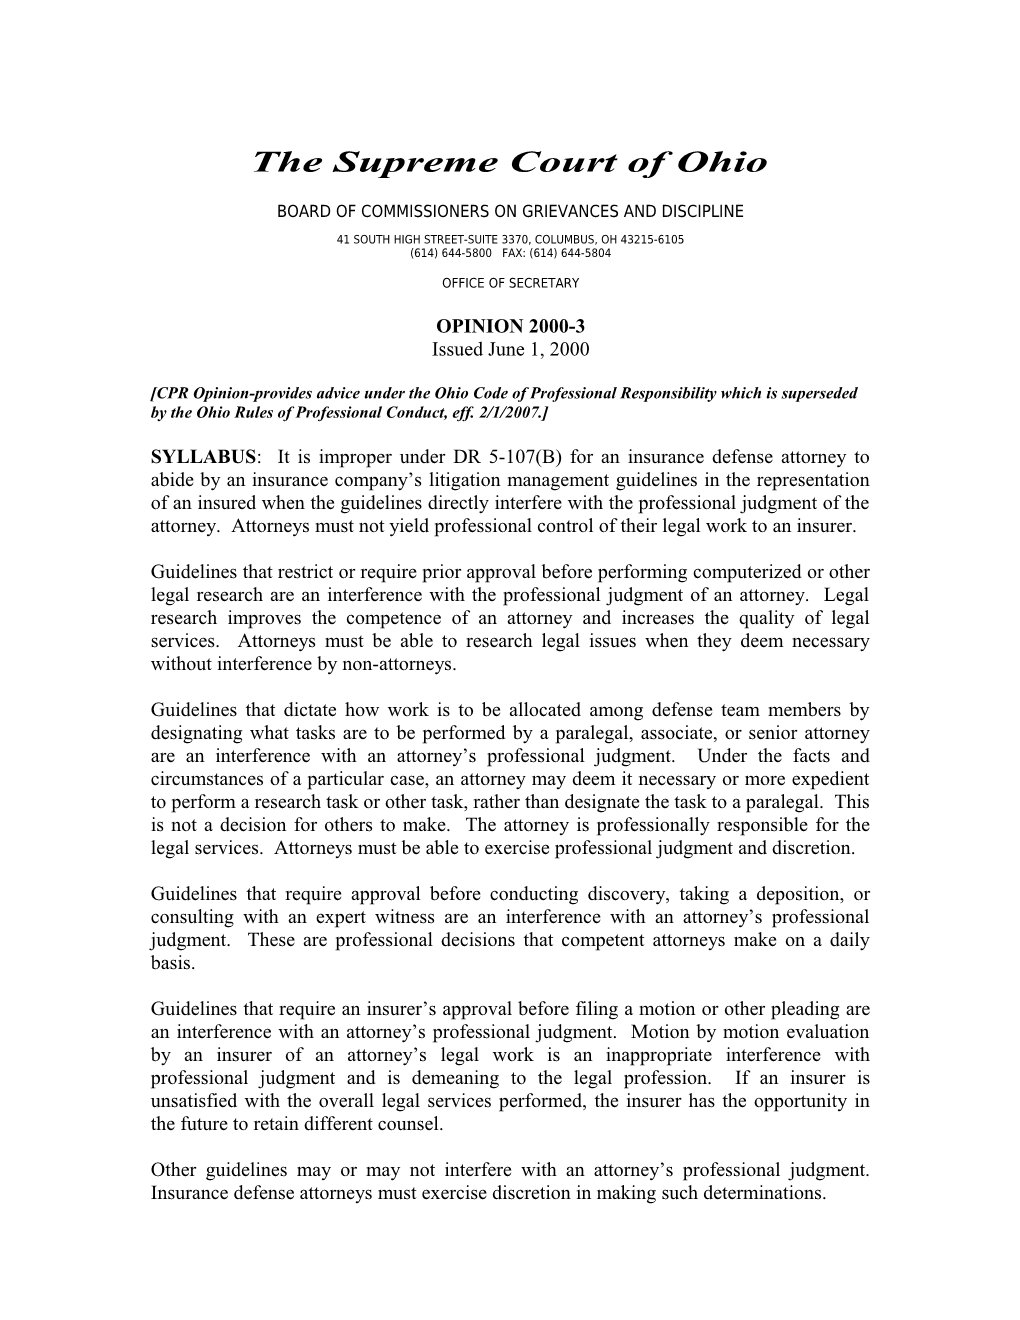 The Supreme Court of Ohio s17